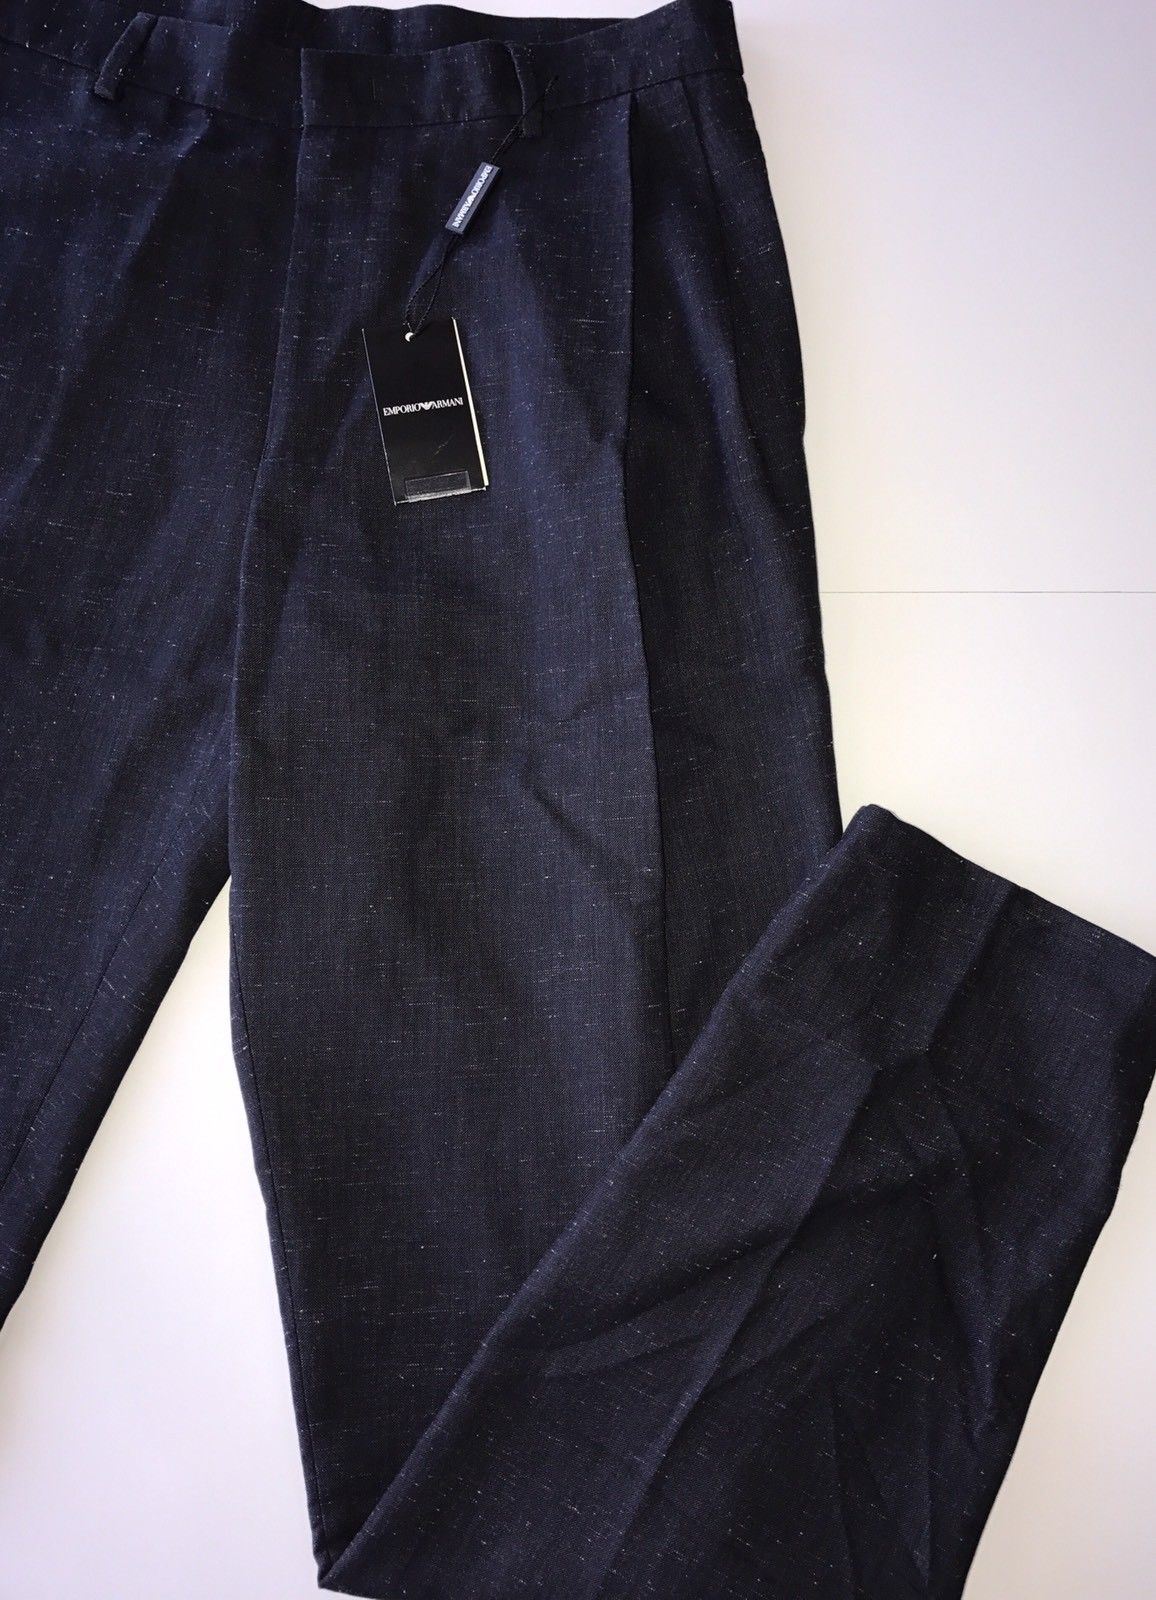 NWT $675 Emporio Armani Mens Dress Pants Size 34 US (50 Euro) T1P840 Italy